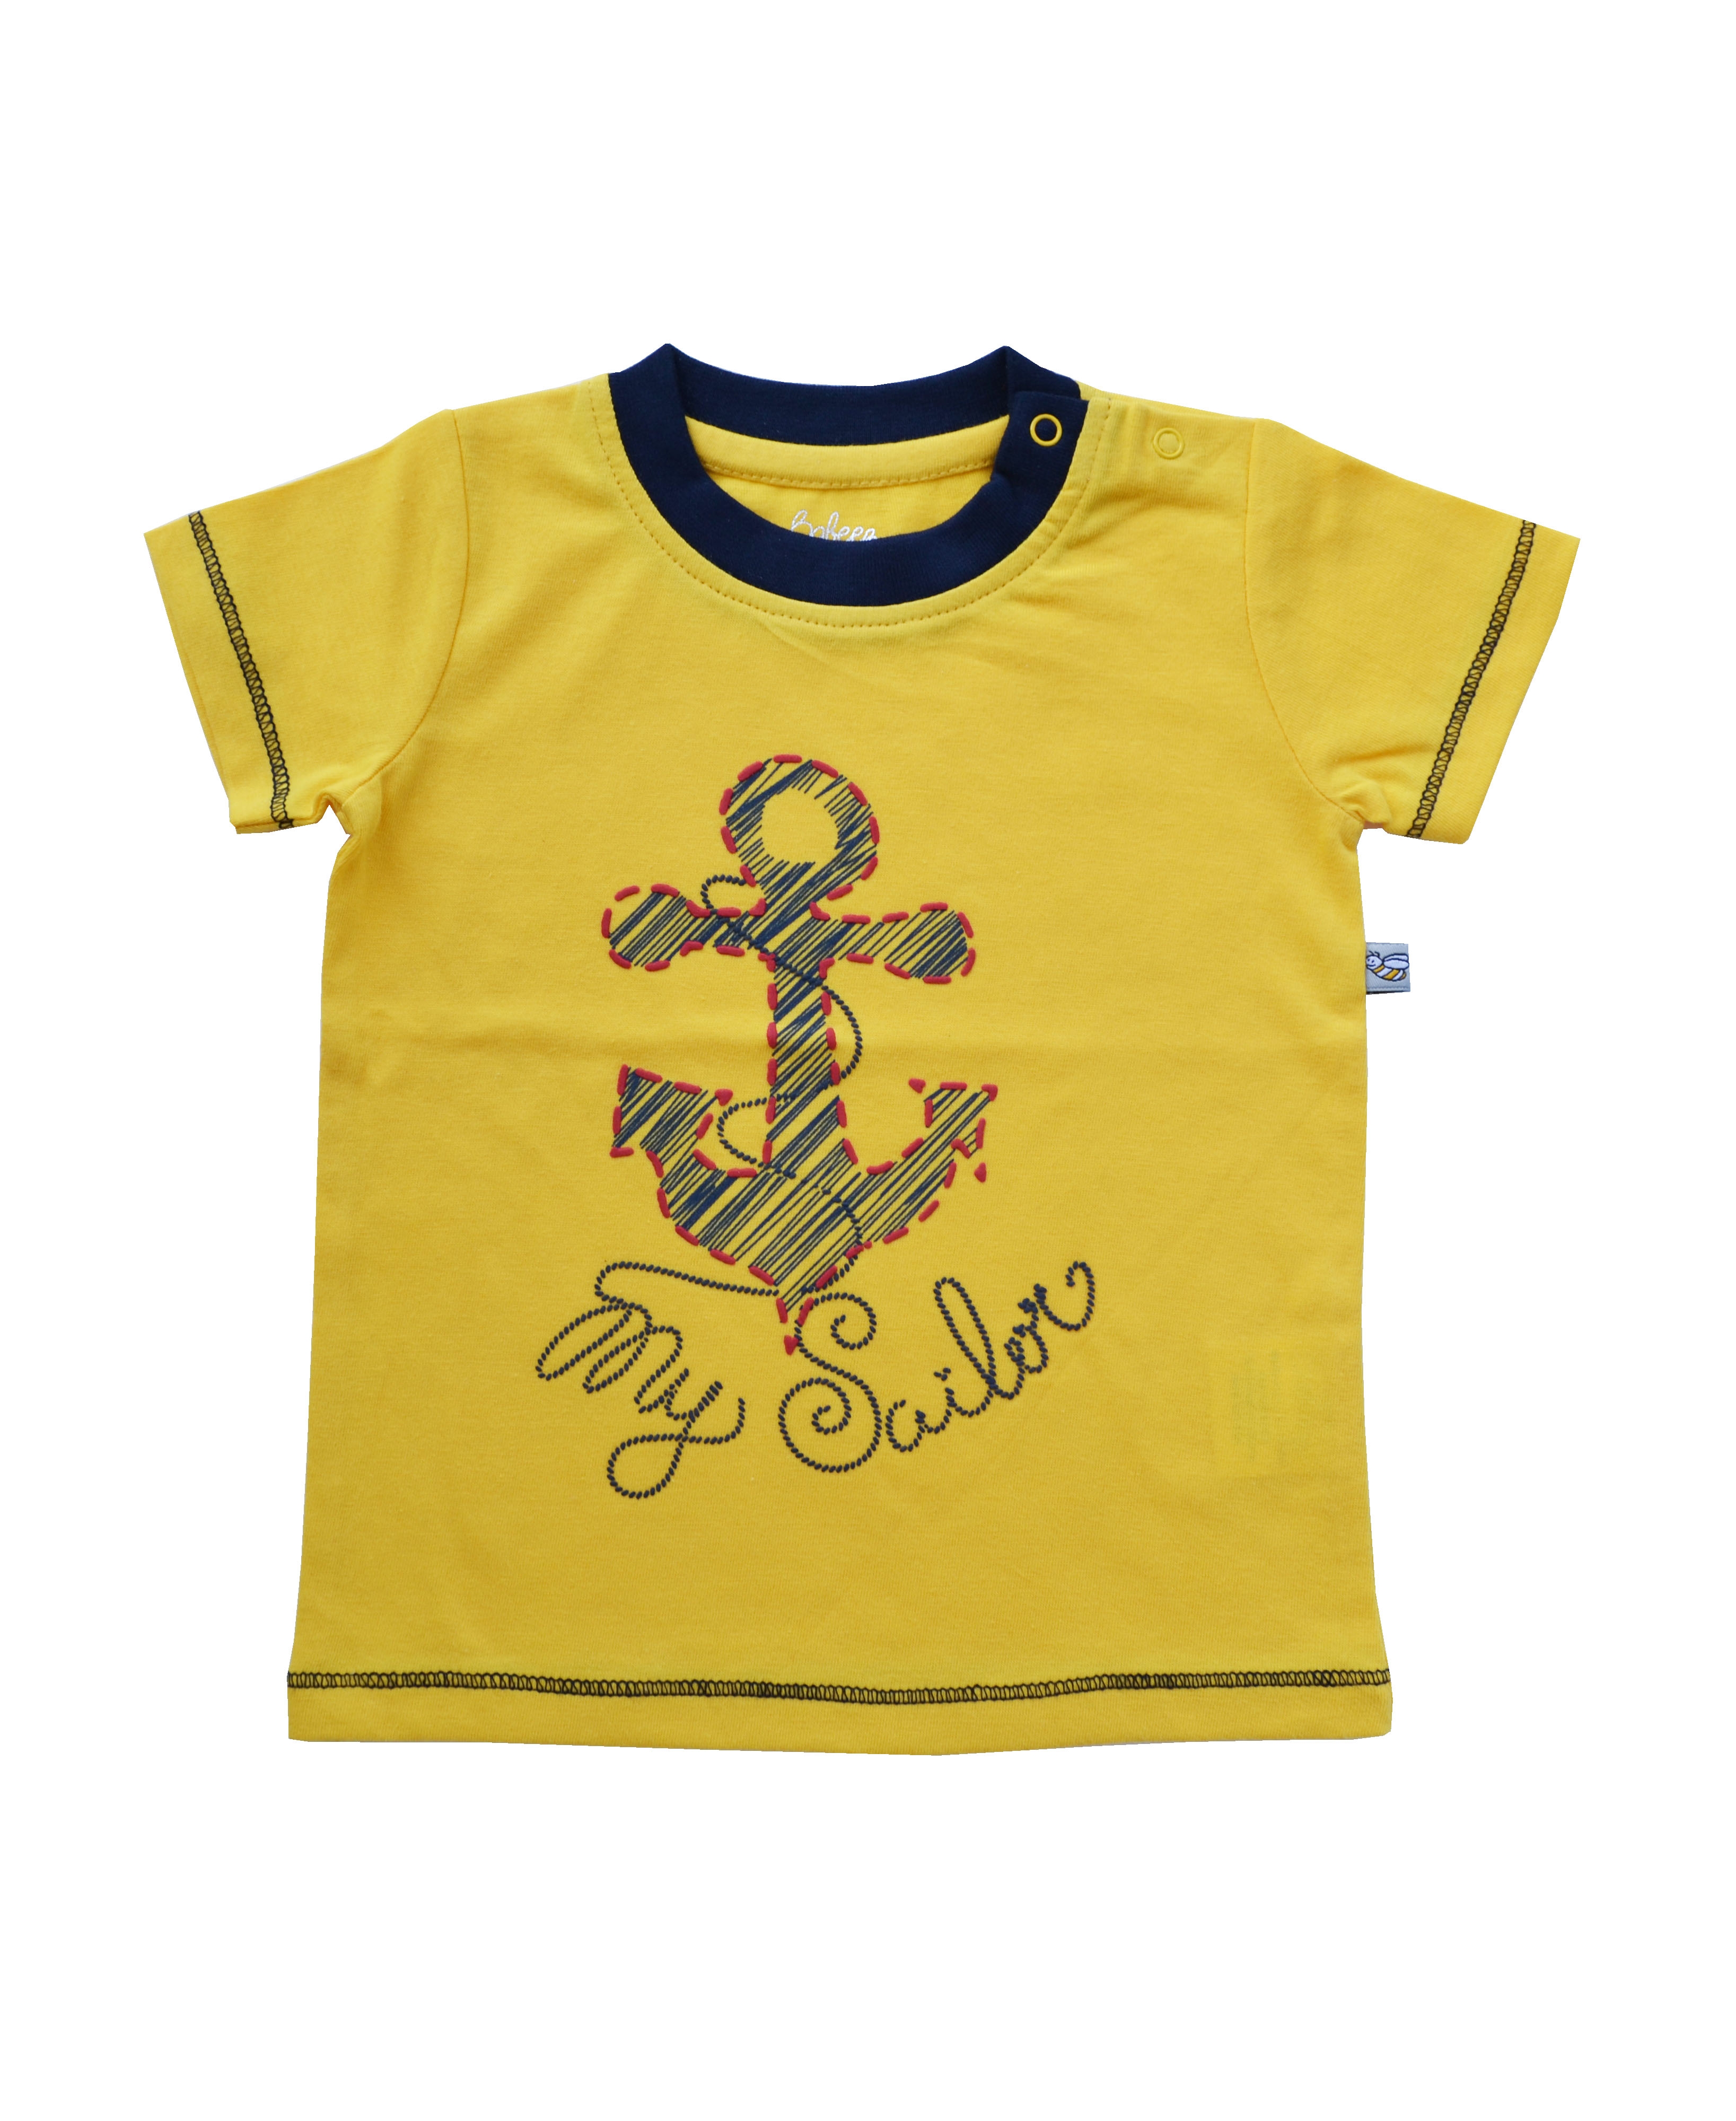 My Sailor Print on Yellow T-Shirt (100% Cotton Single Jersey)